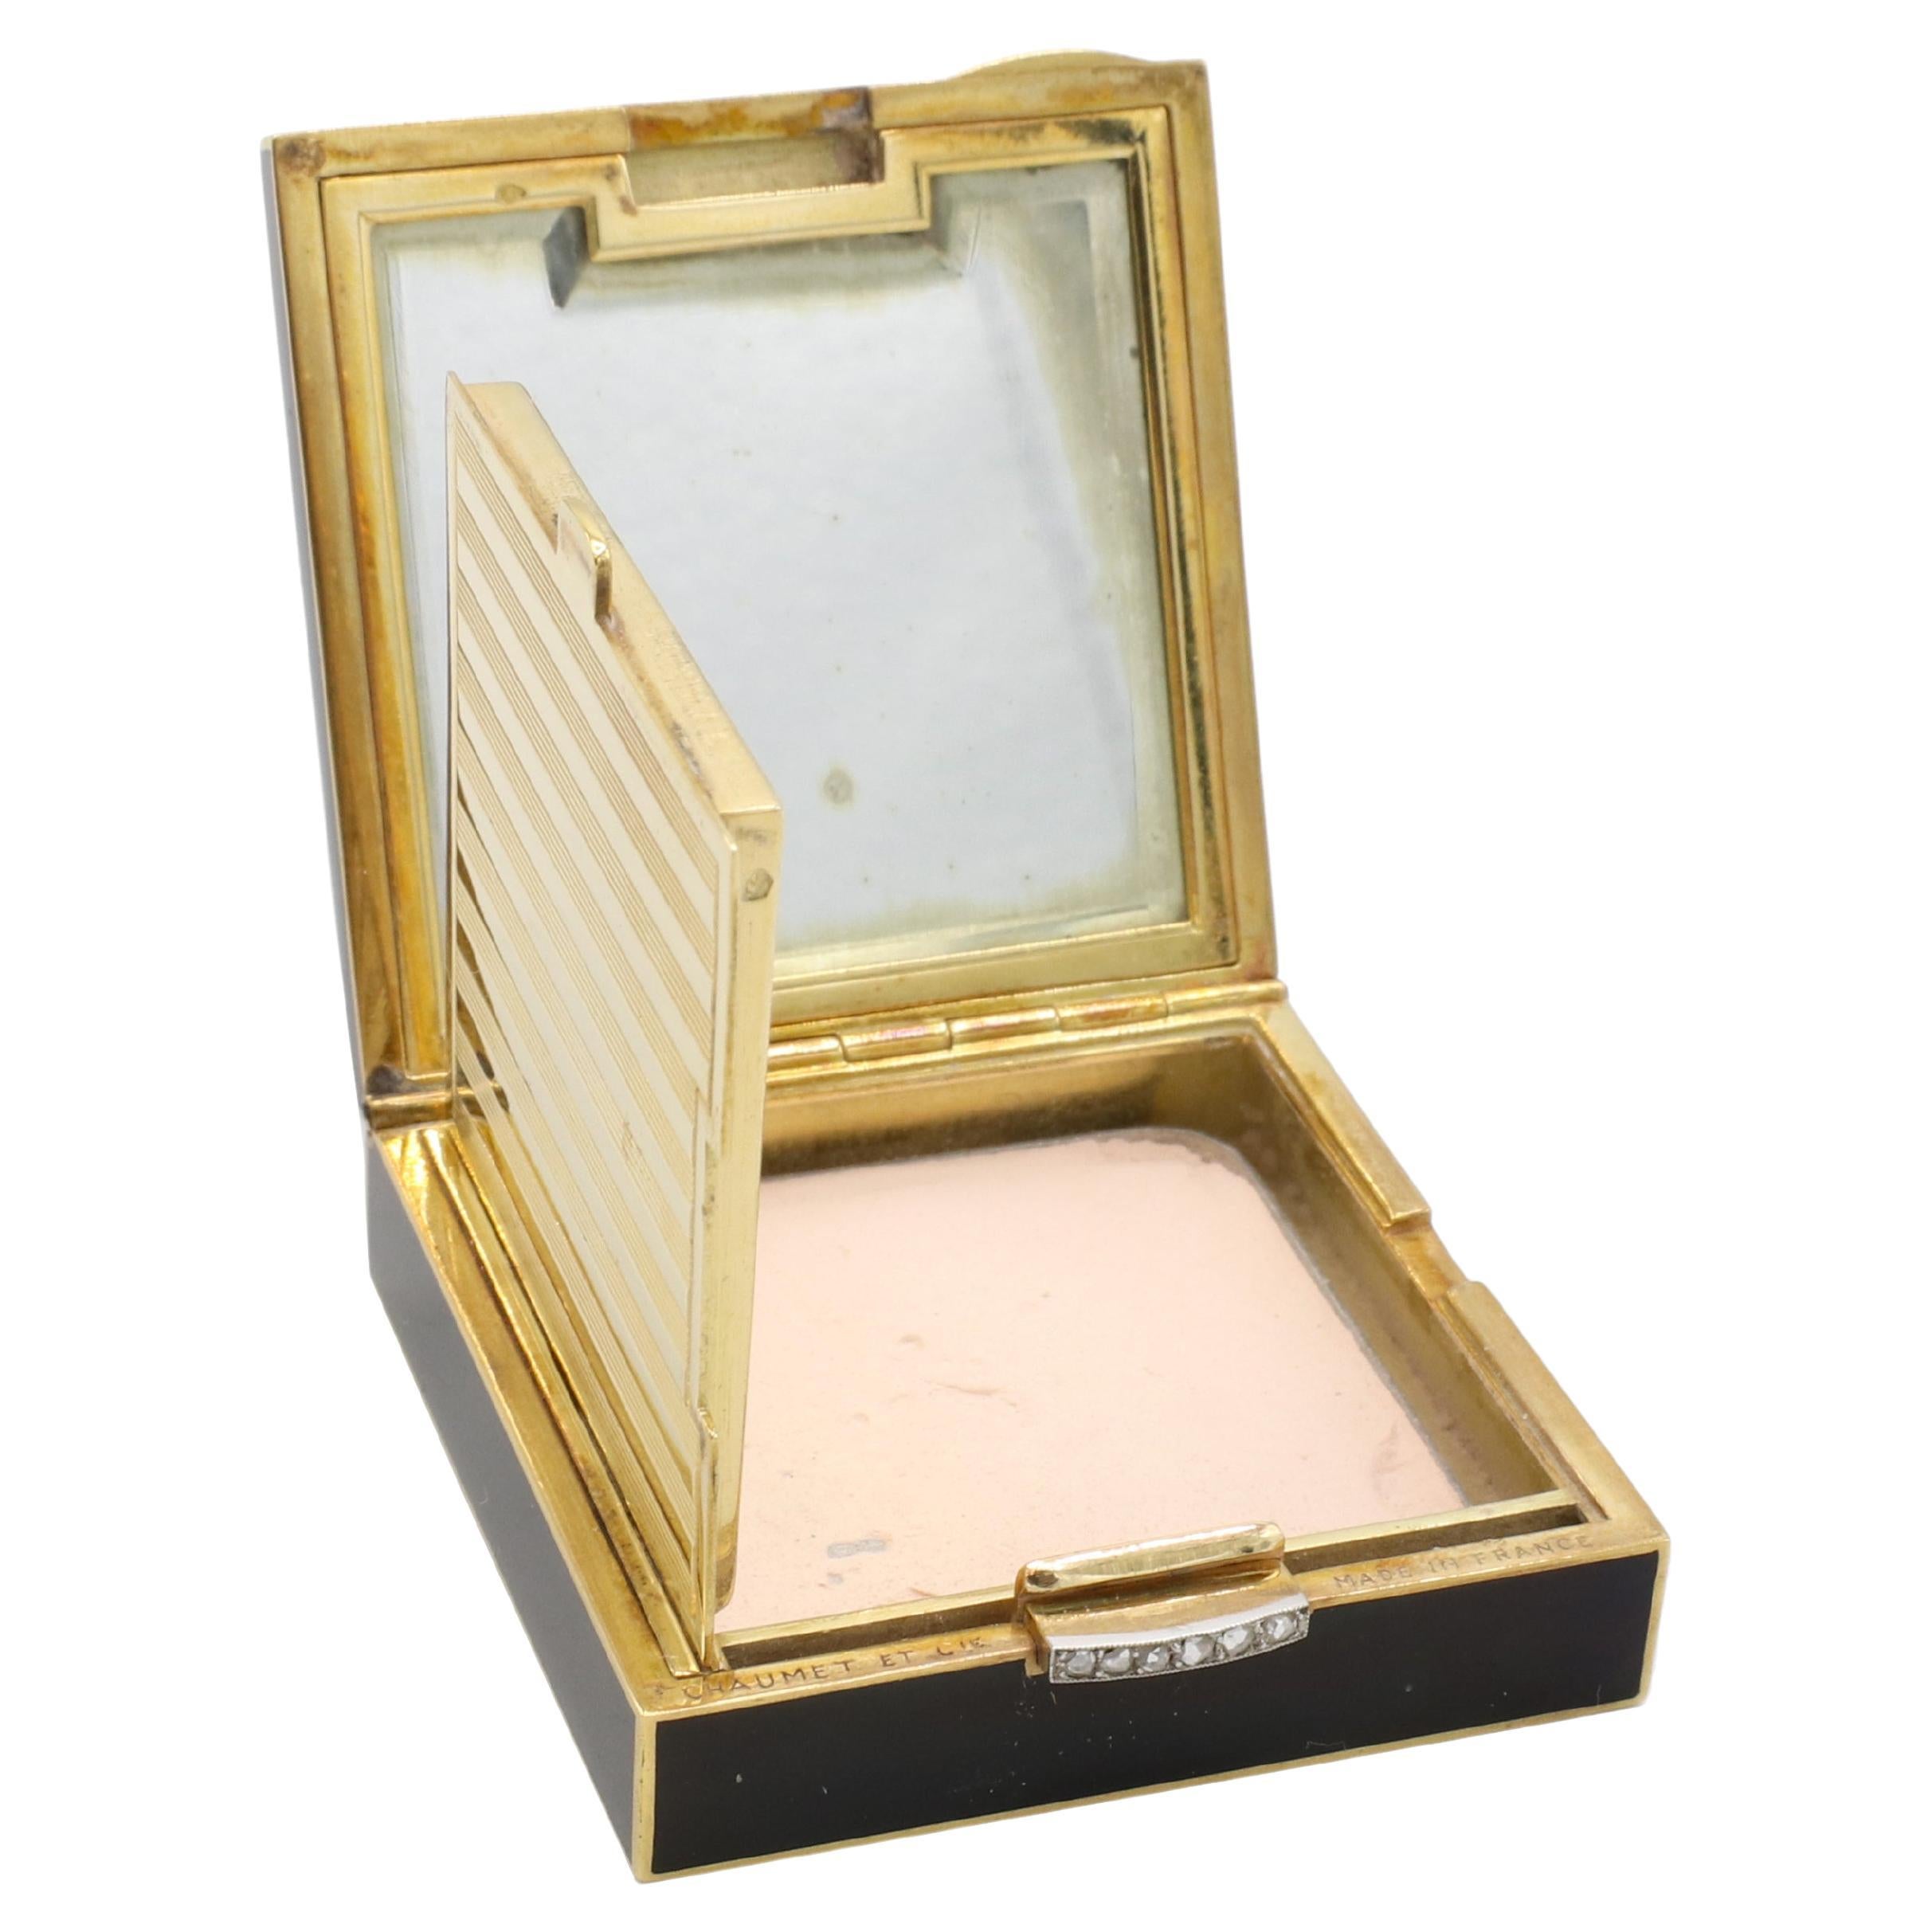 Art Deco Chaumet 18 Karat Yellow Gold & Enamel Mirrored Powder Compact with Case